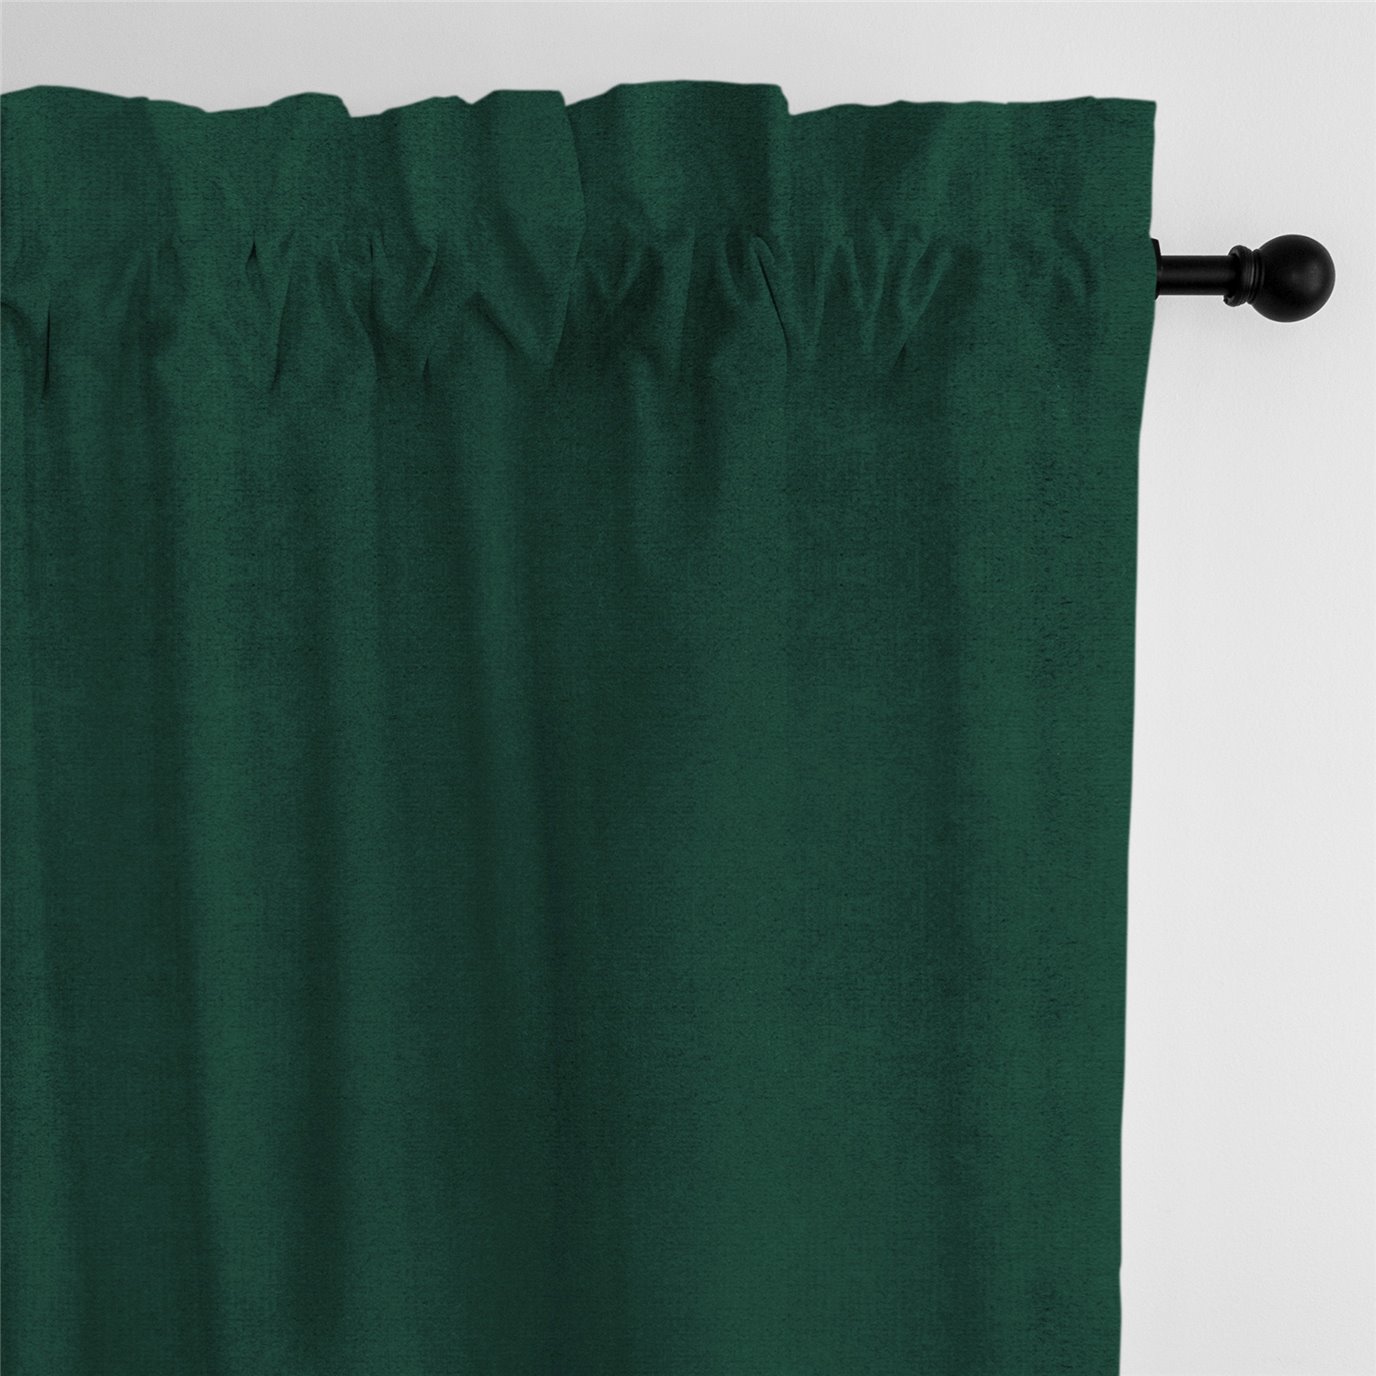 Vanessa Emerald Pole Top Drapery Panel - Pair - Size 50"x84"